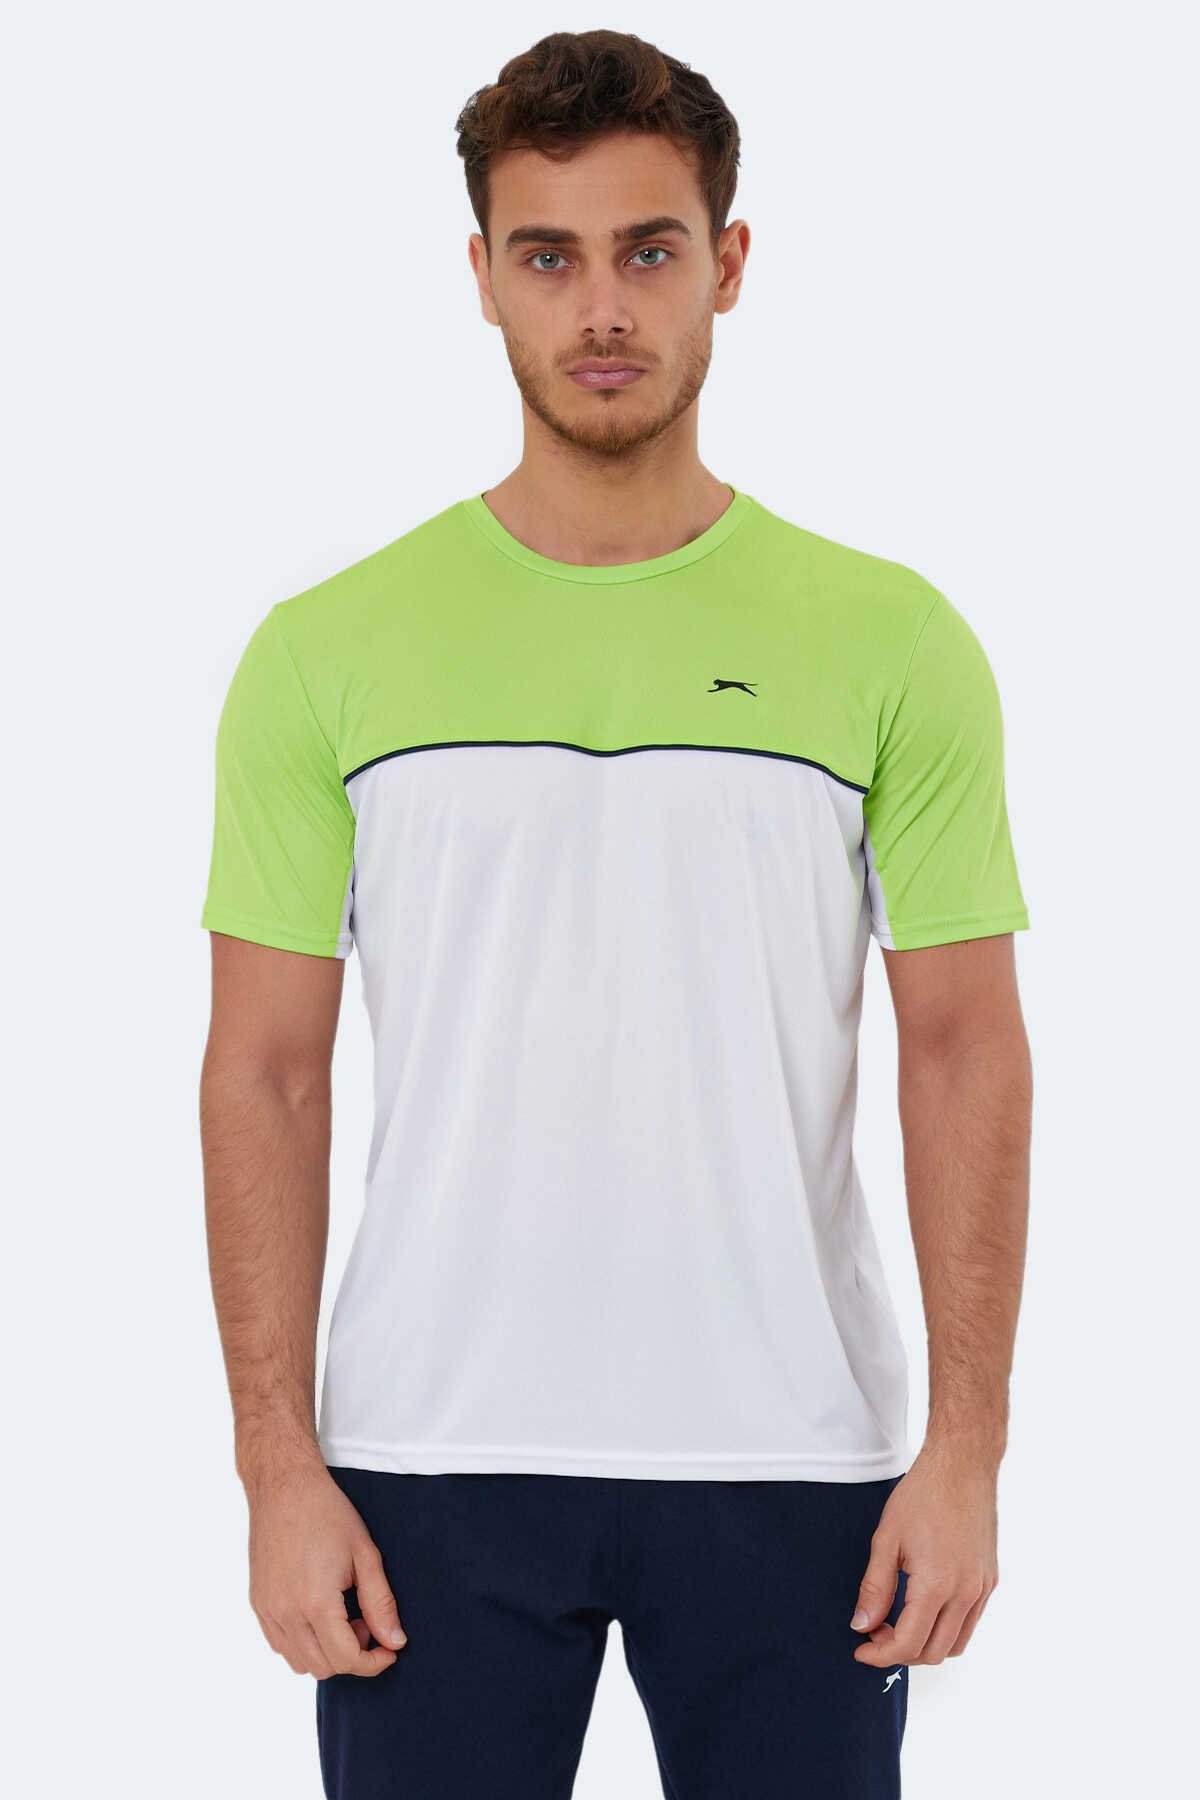 Slazenger - Slazenger OBSERVE Erkek T-Shirt Beyaz / Yeşil